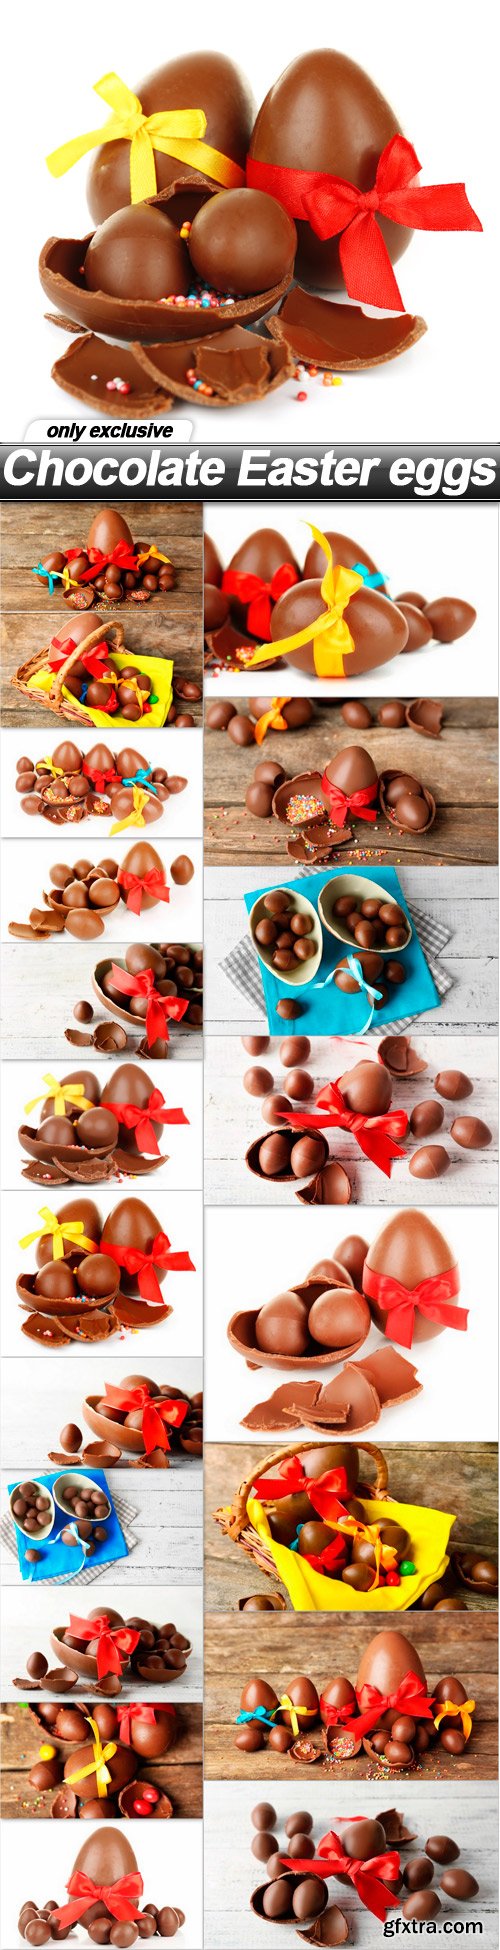 Chocolate Easter eggs - 20 UHQ JPEG